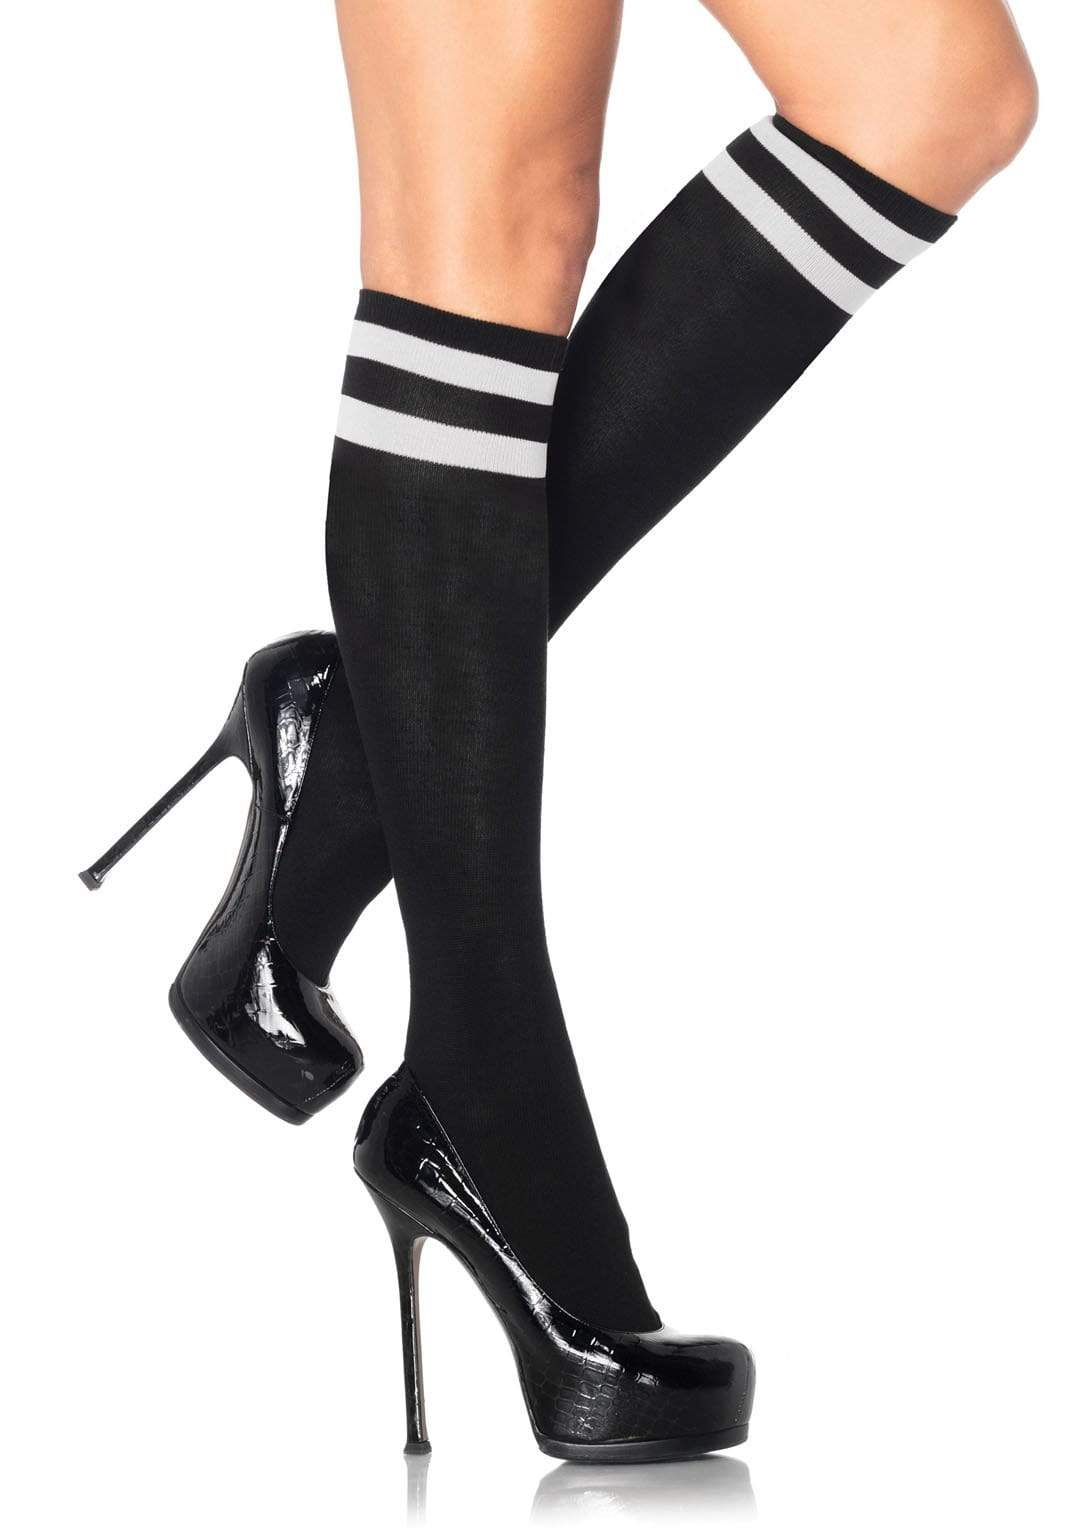 Black Athletic Knee High Socks w/ White Stripes